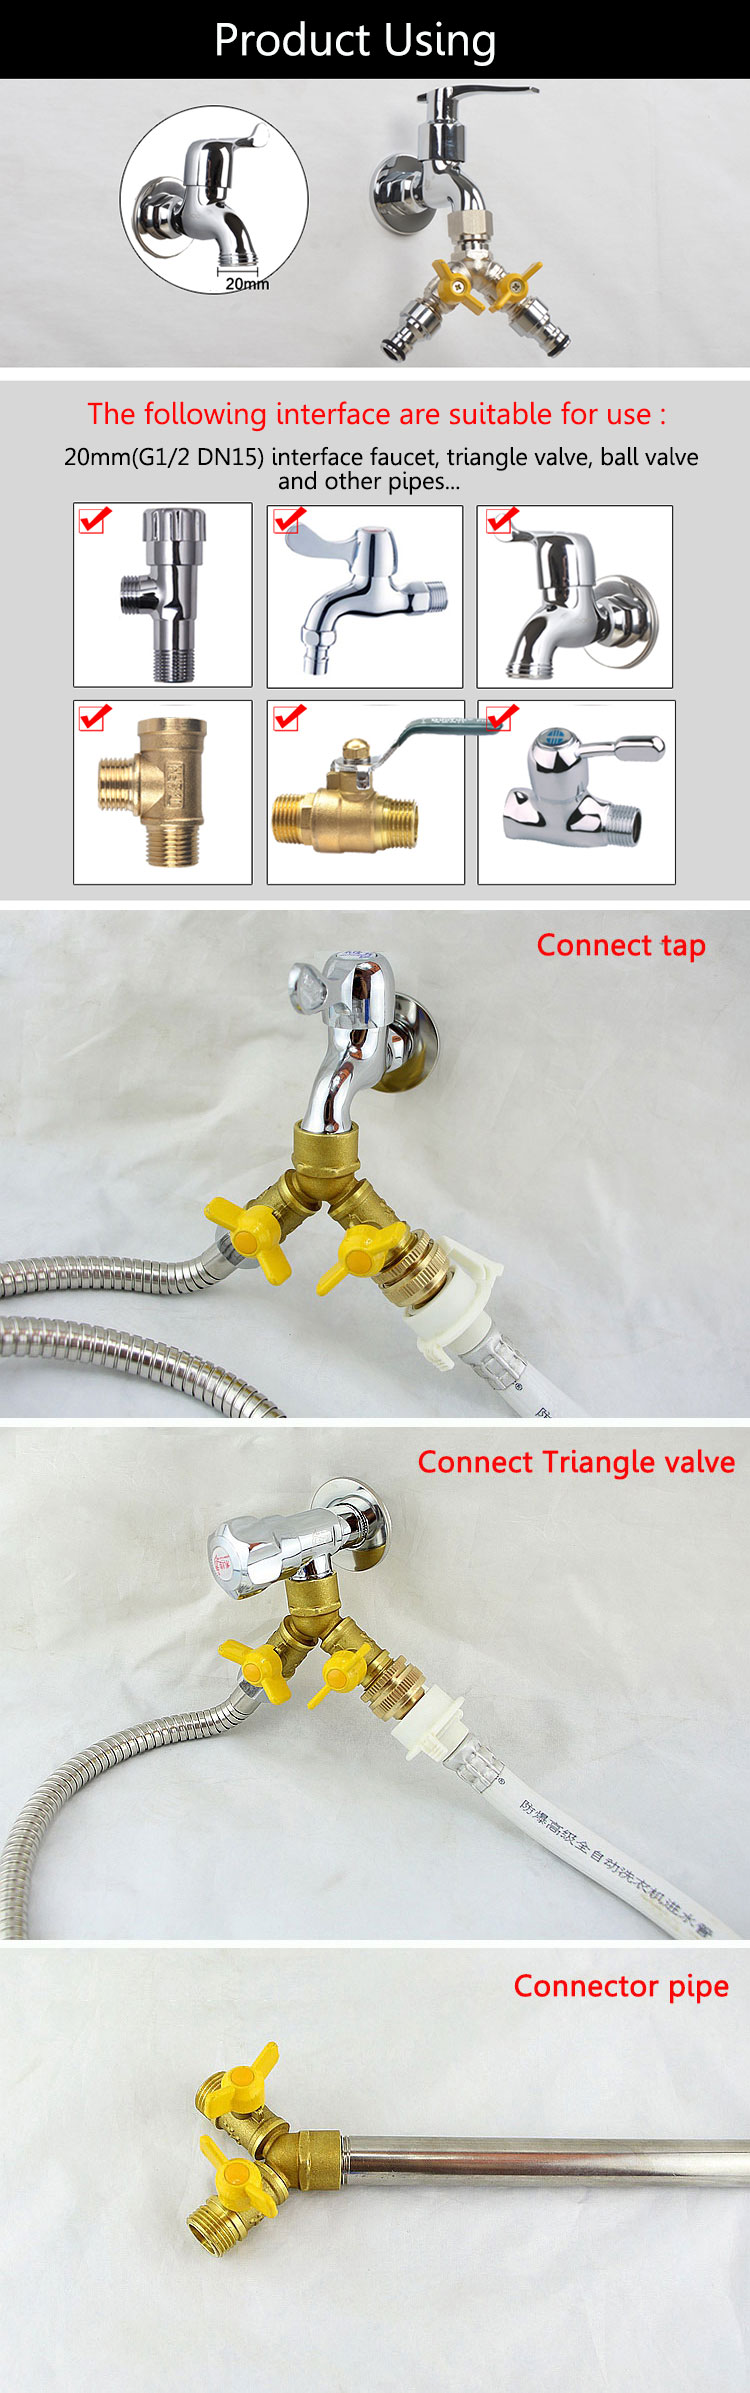 2-Way-Garden-Hose-Splitter-Y-Ball-Valve-Connector-Outdoor-Faucet-Sprinkler-Drip-Irrigation-System-1058611